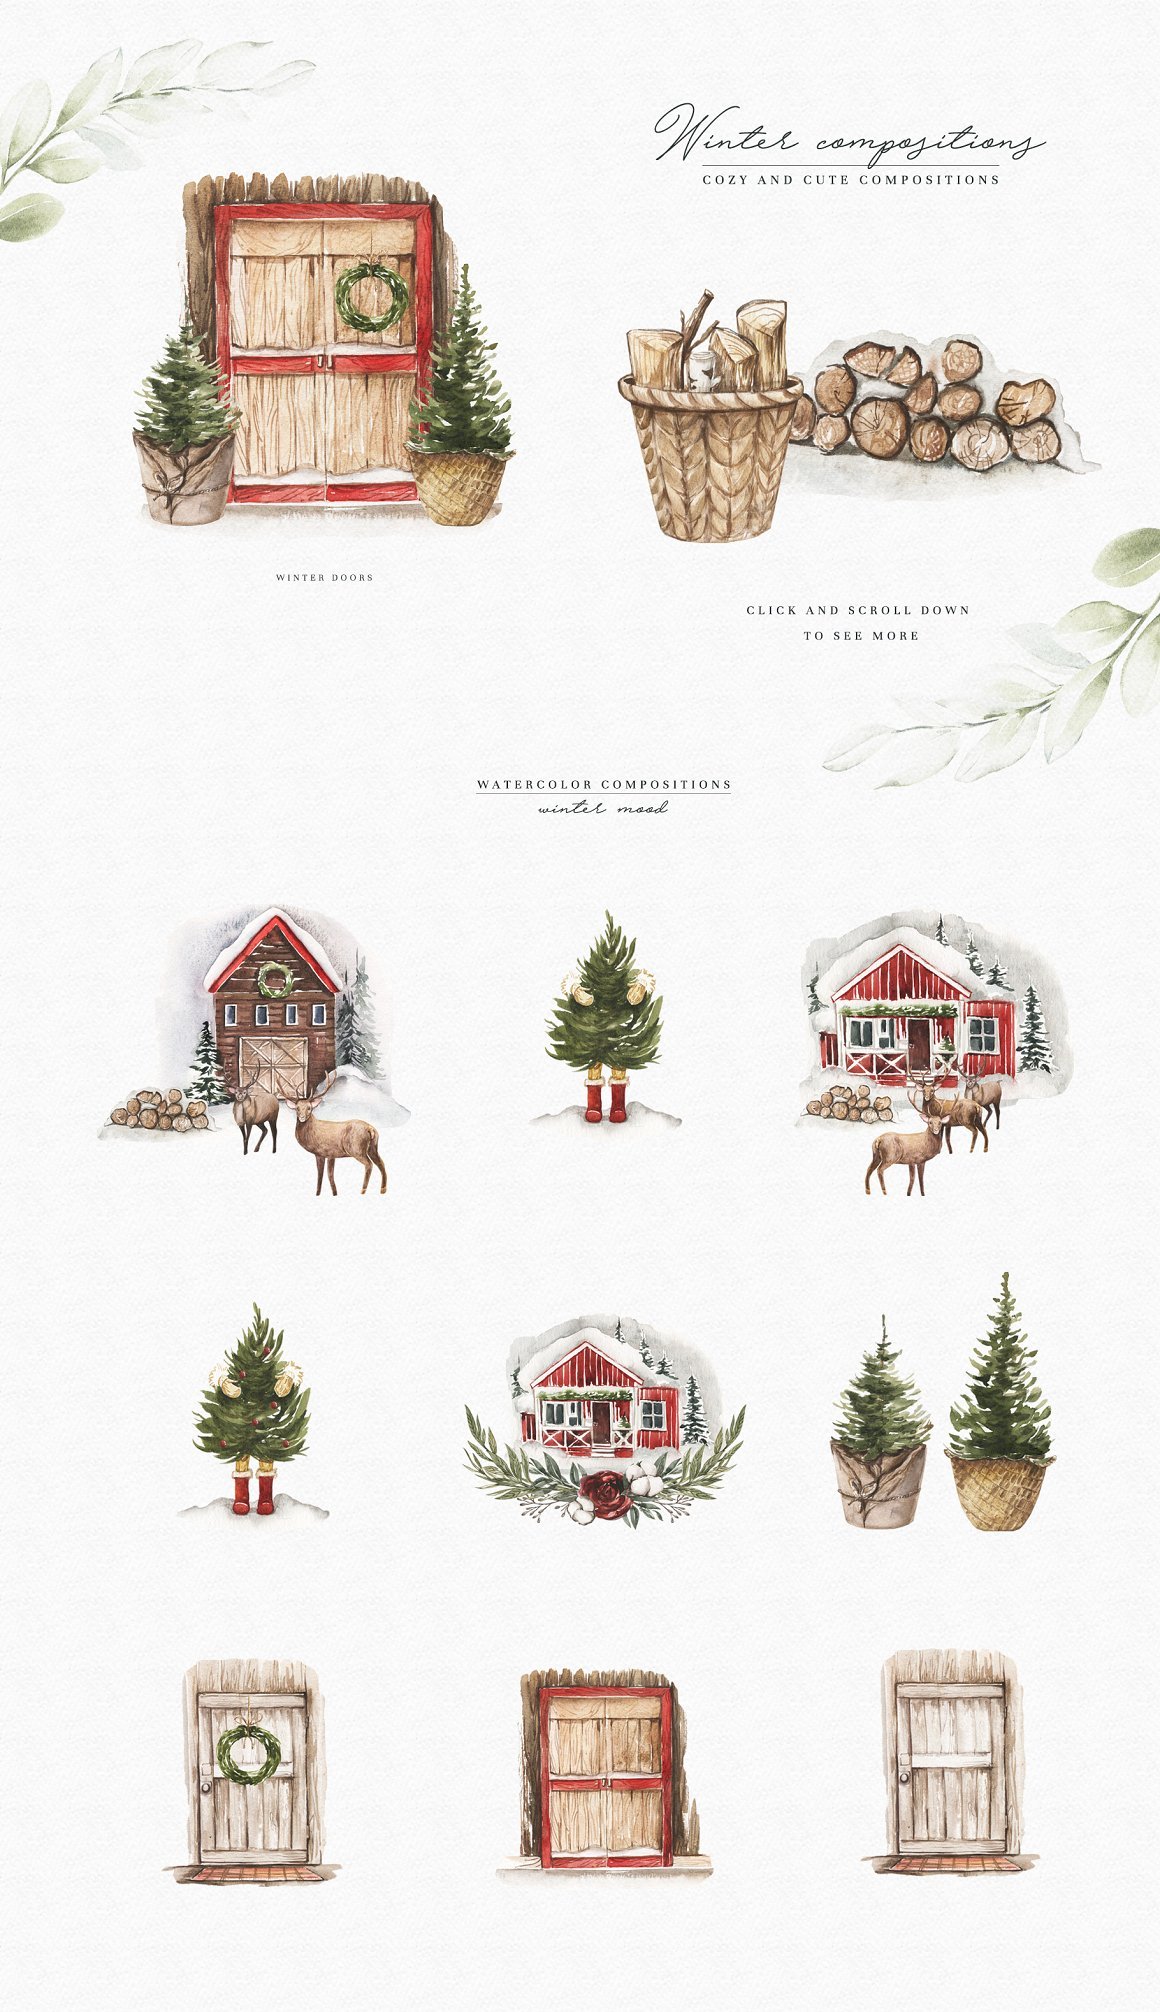 House and Christmas trees image.